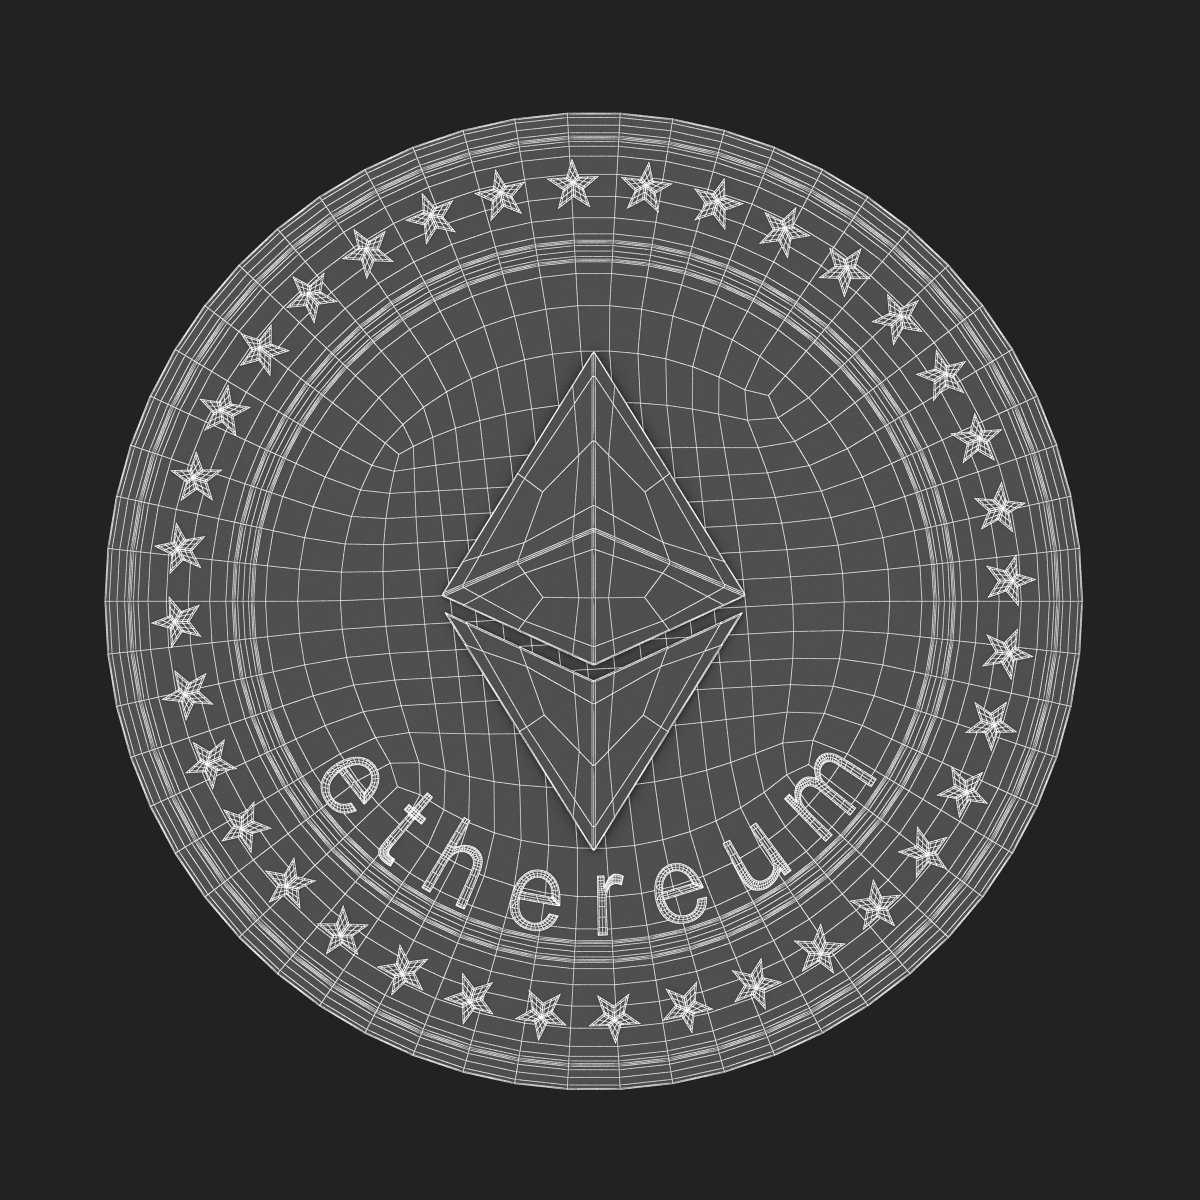 Ethereum Coin 3D Model Free | NFT Ape 3D Model Download